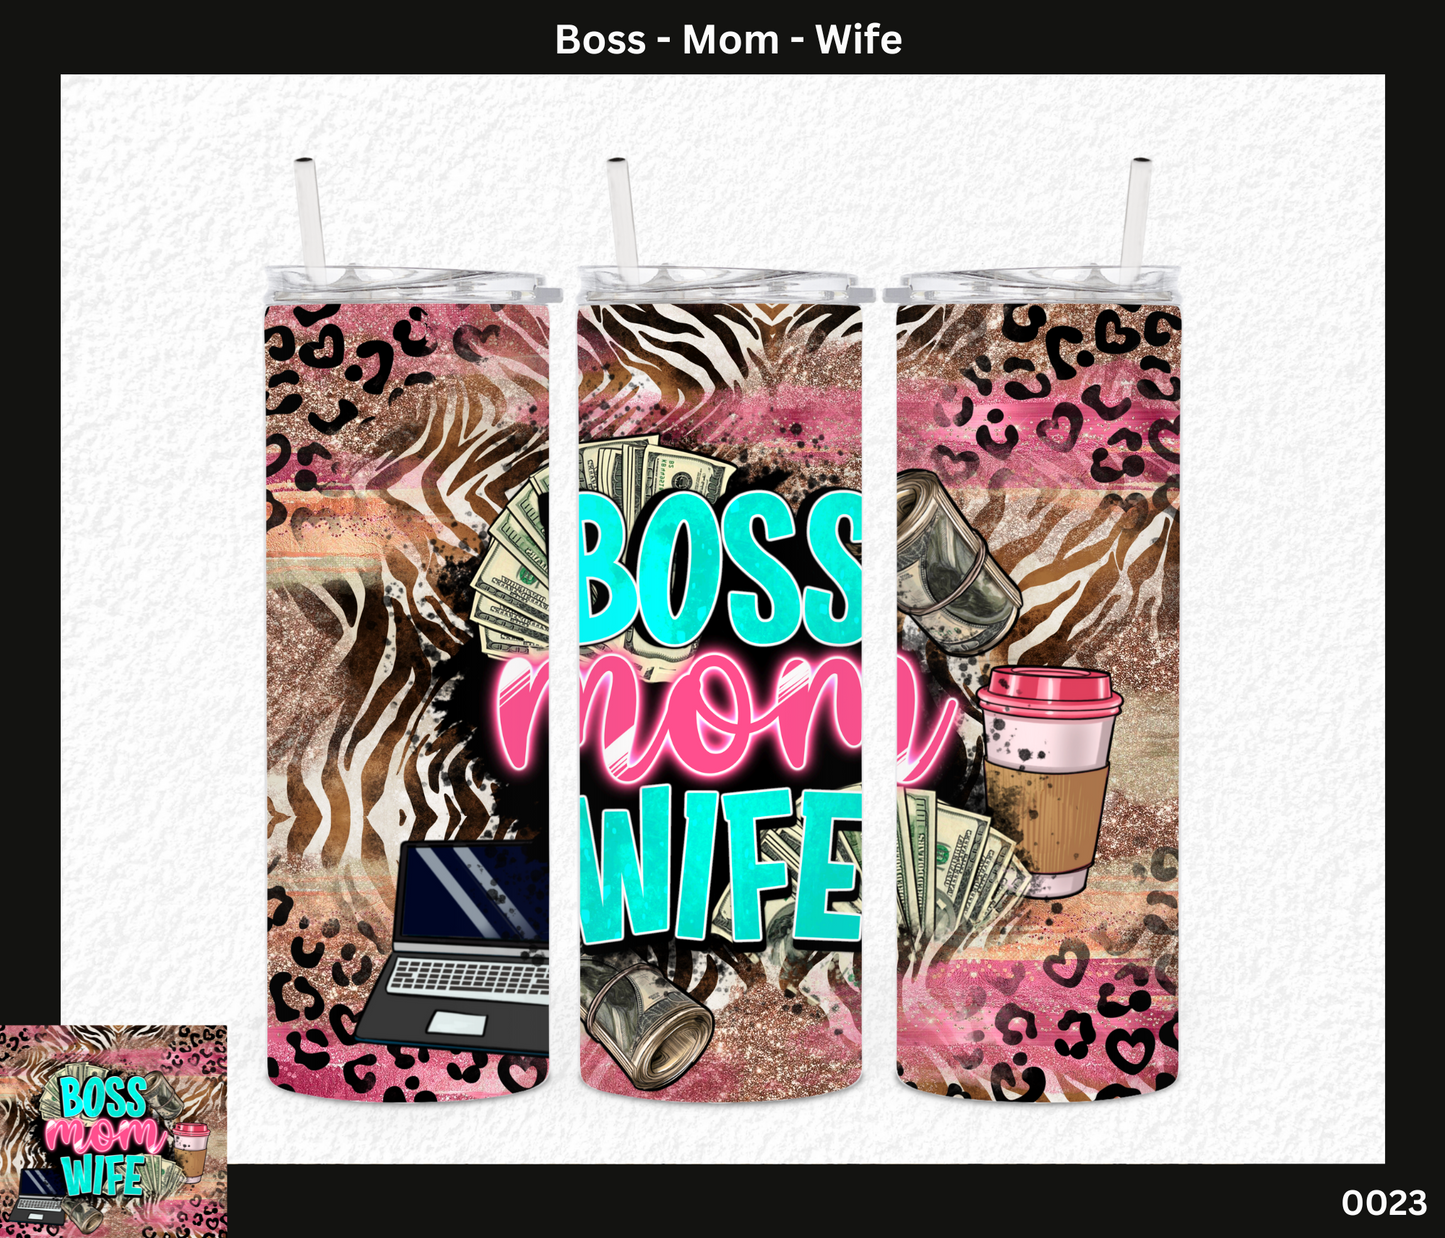 Boss - Mom - Wife